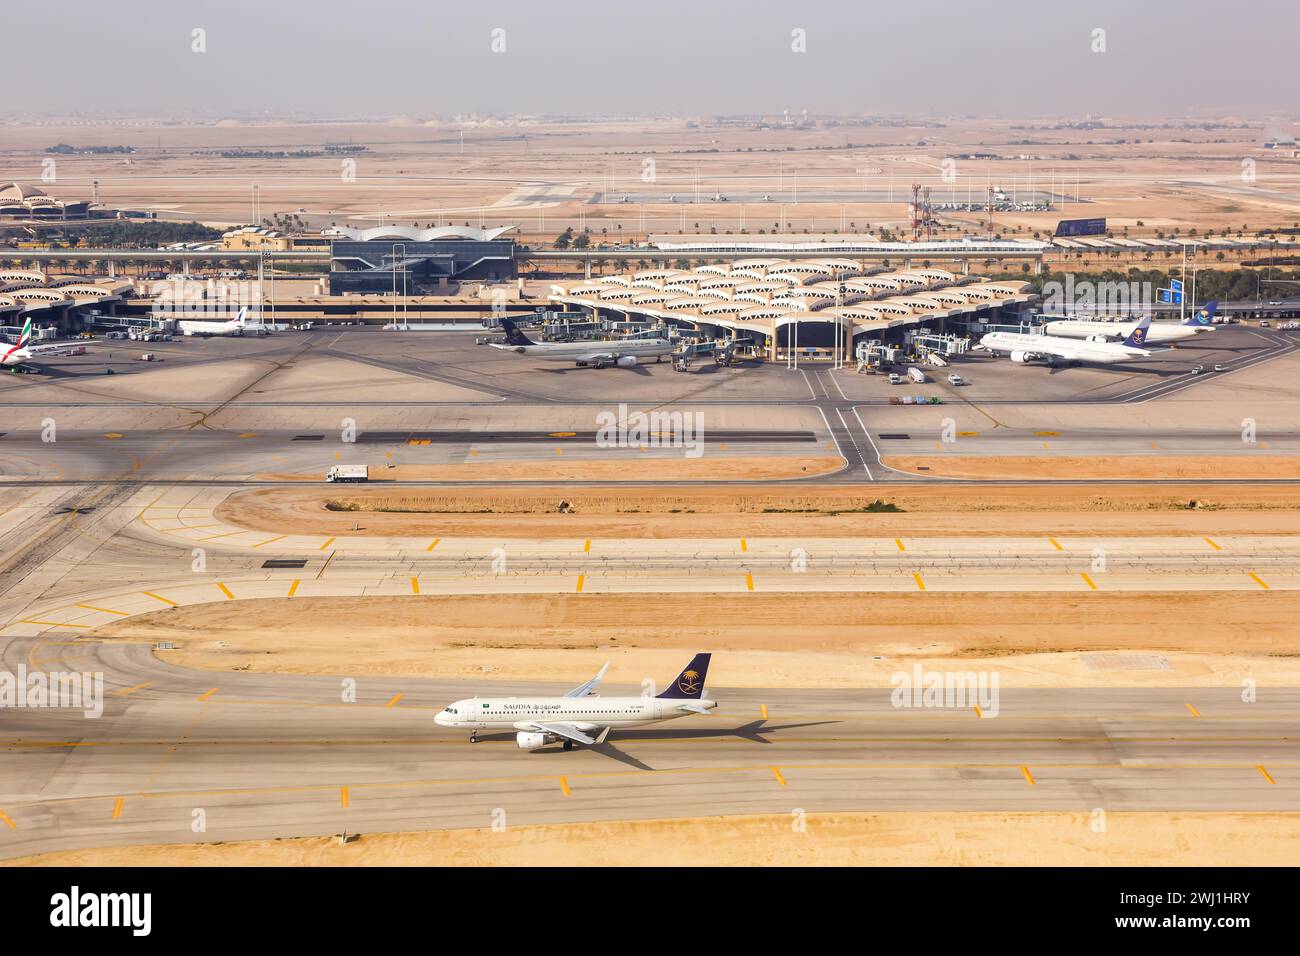 Aerial view of Riyadh International Airport in Saudi Arabia Stock Photo